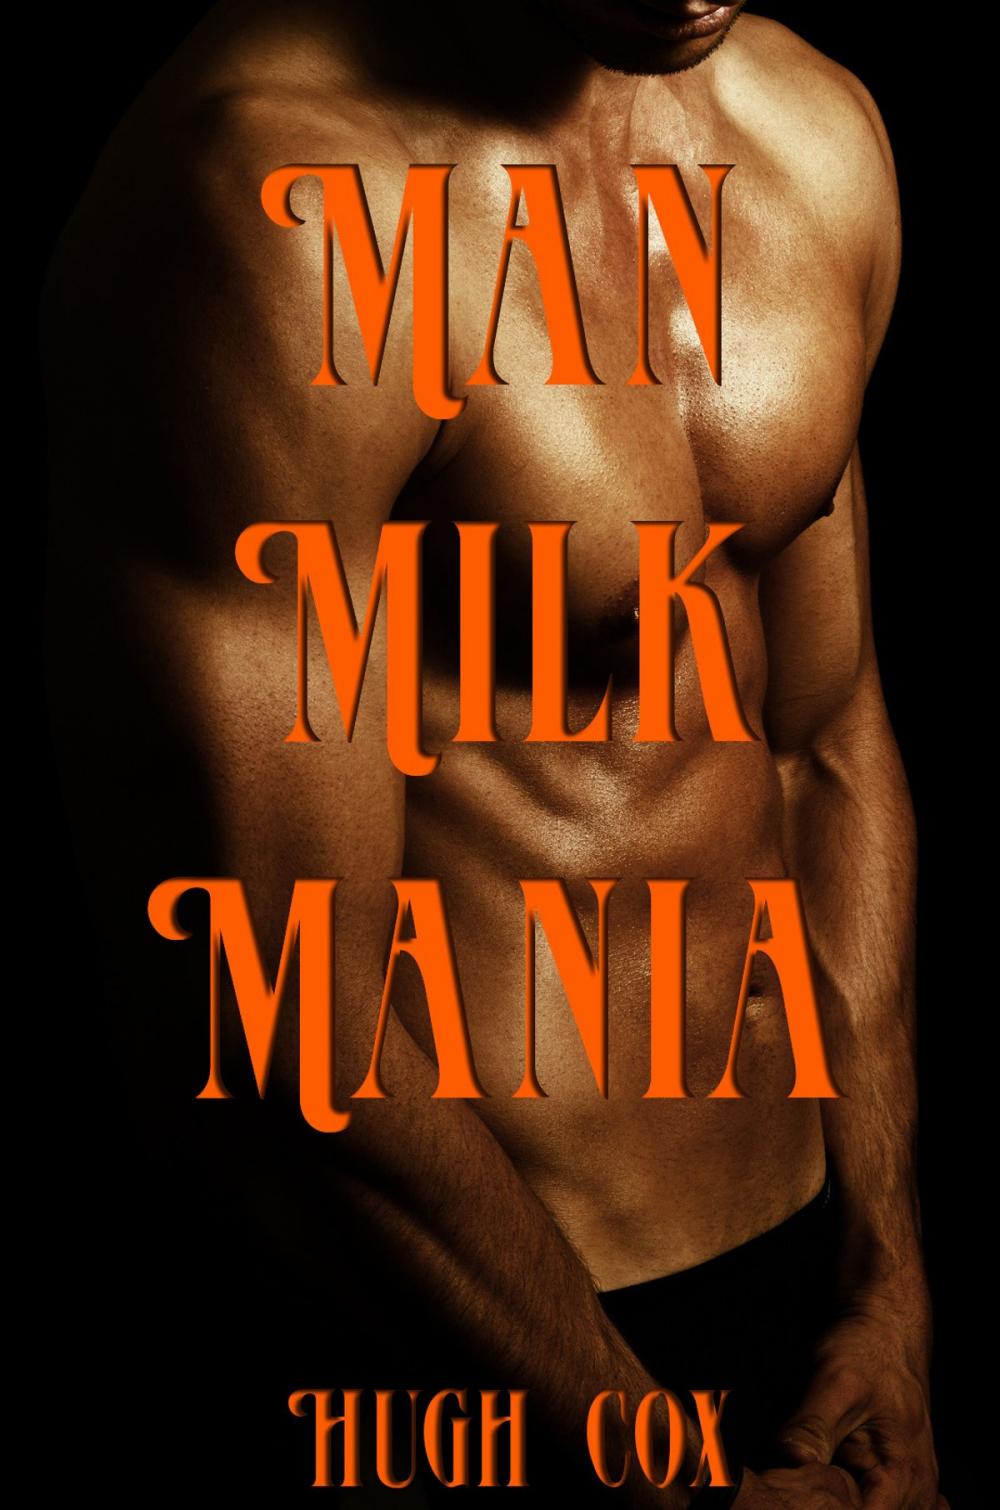 Big bigCover of Man Milk Mania